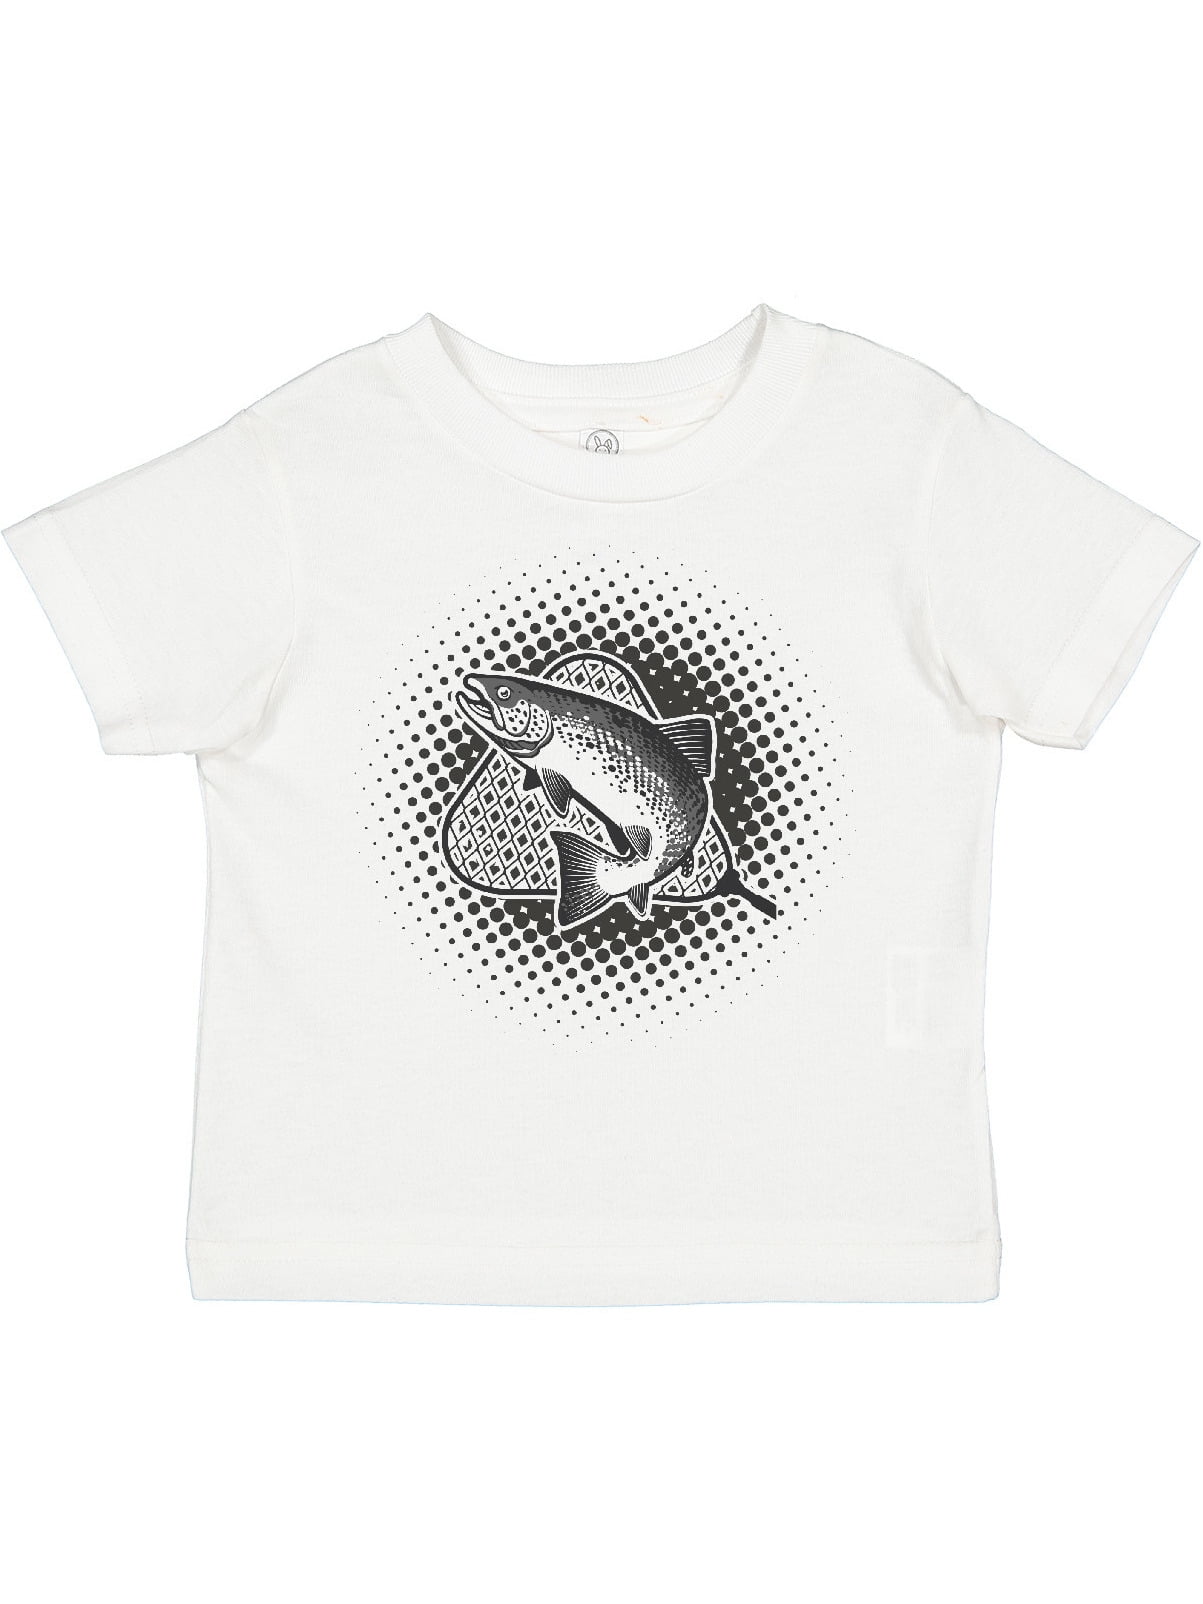 Inktastic Trout Fisherman Fly Fishing Boys or Girls Toddler T-Shirt